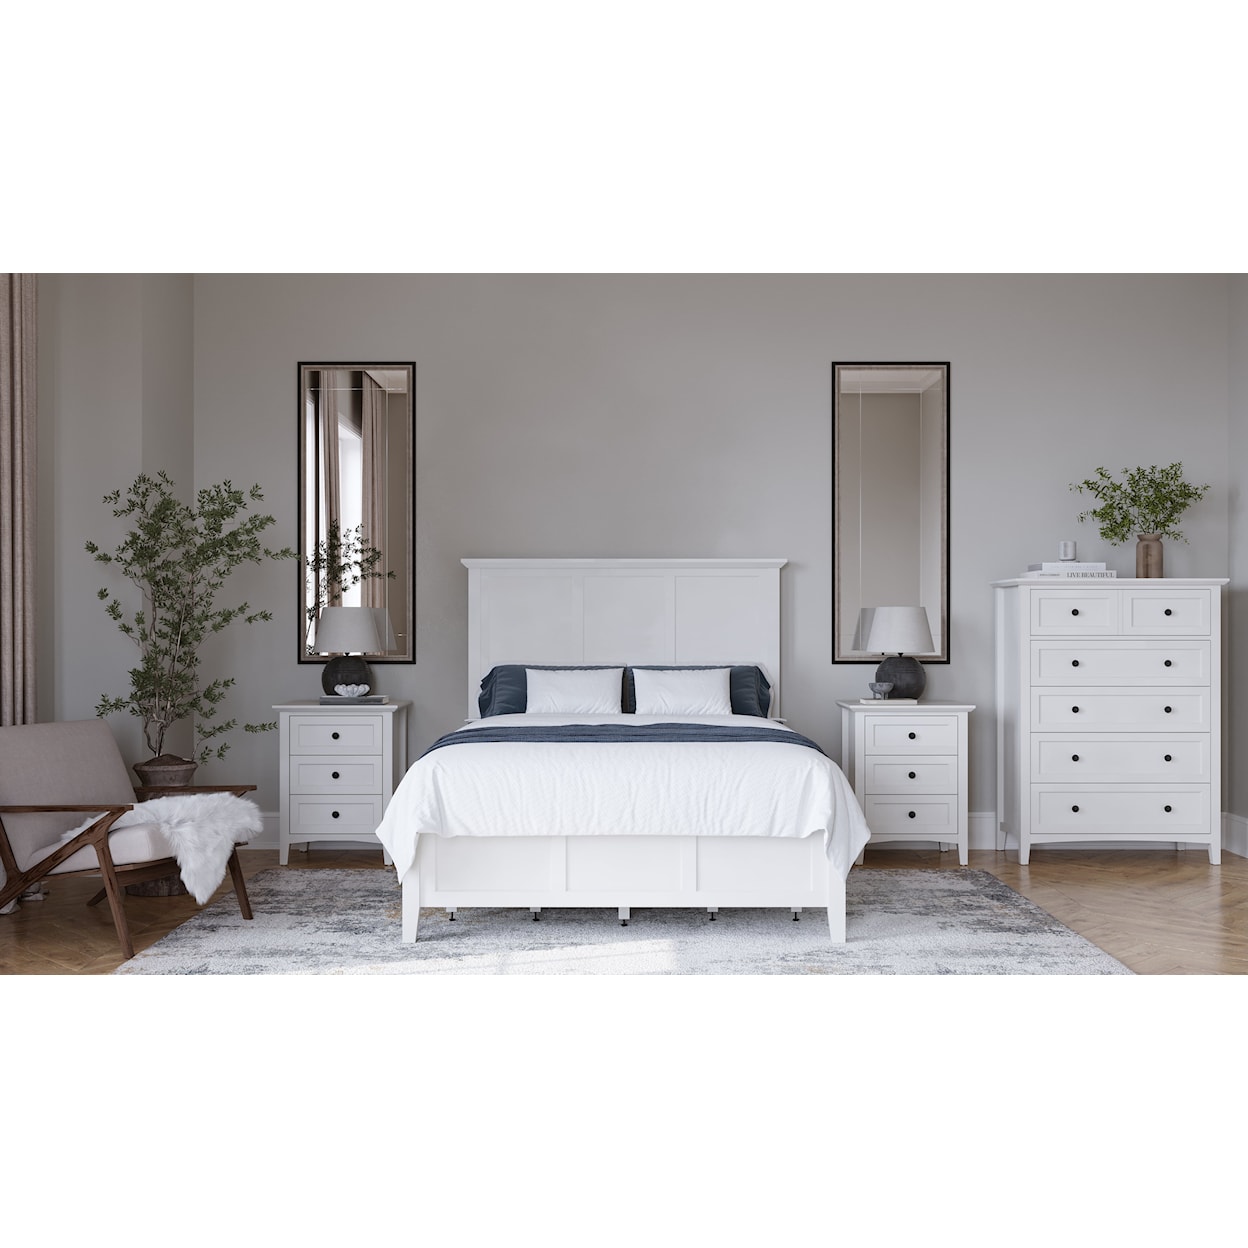 Modus International Grace Snowfall California King Bedroom Set